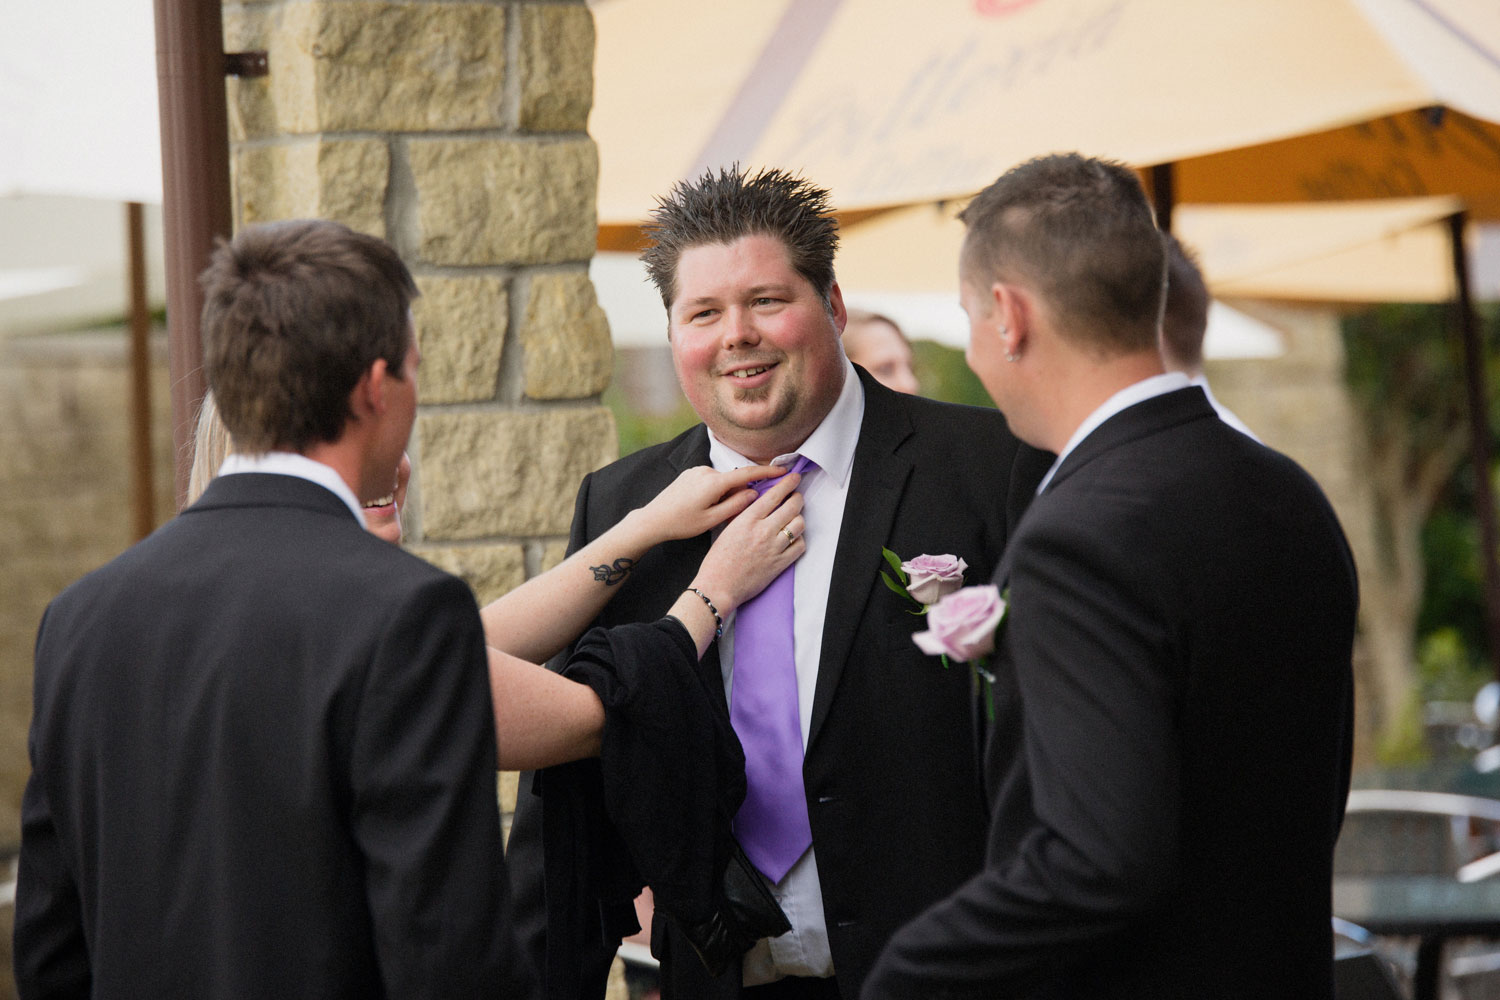 groomsmen at the wedding